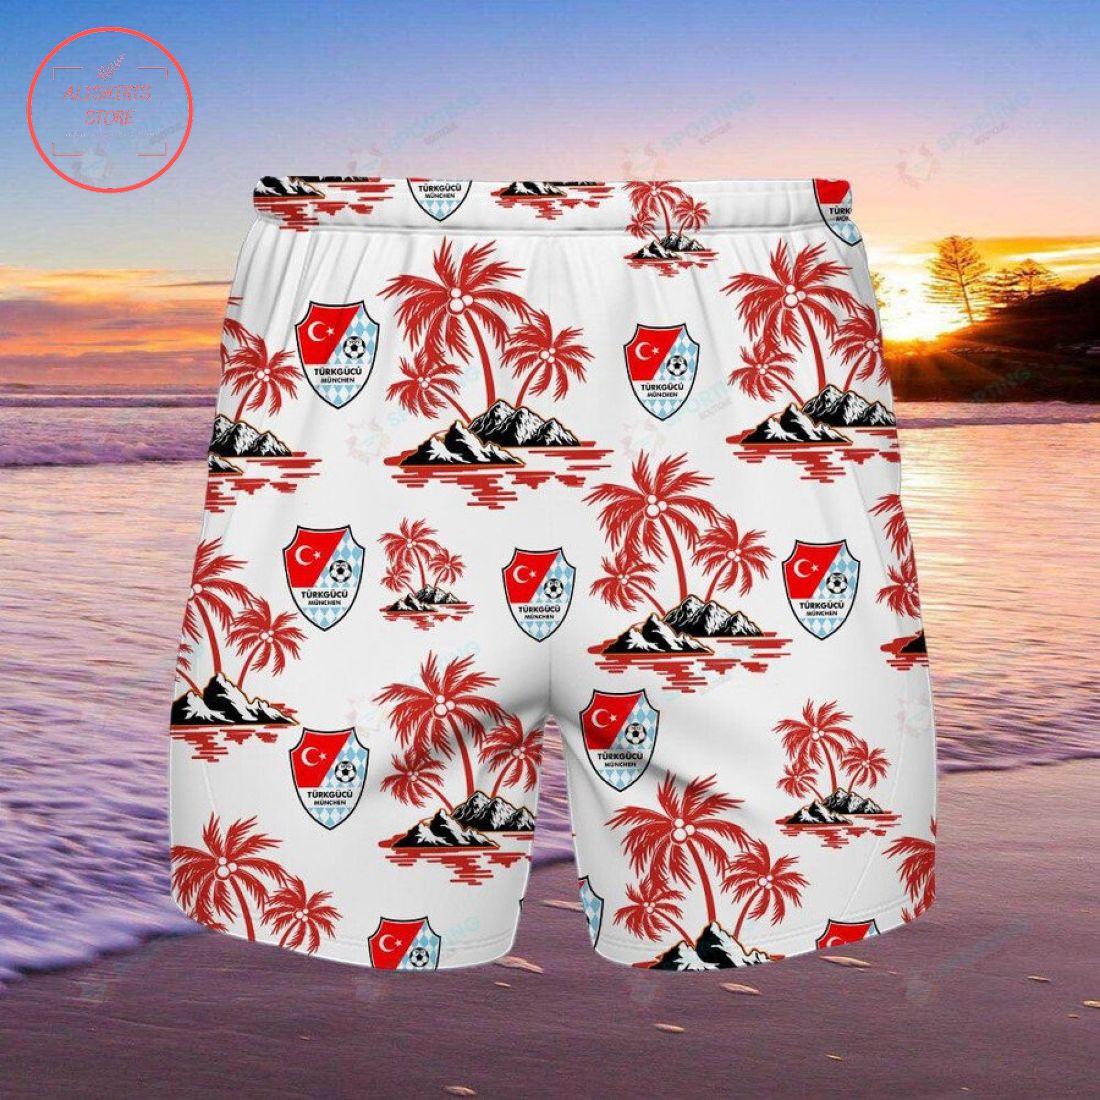 Turkgucu Munchen Hawaiian Shirt and Shorts